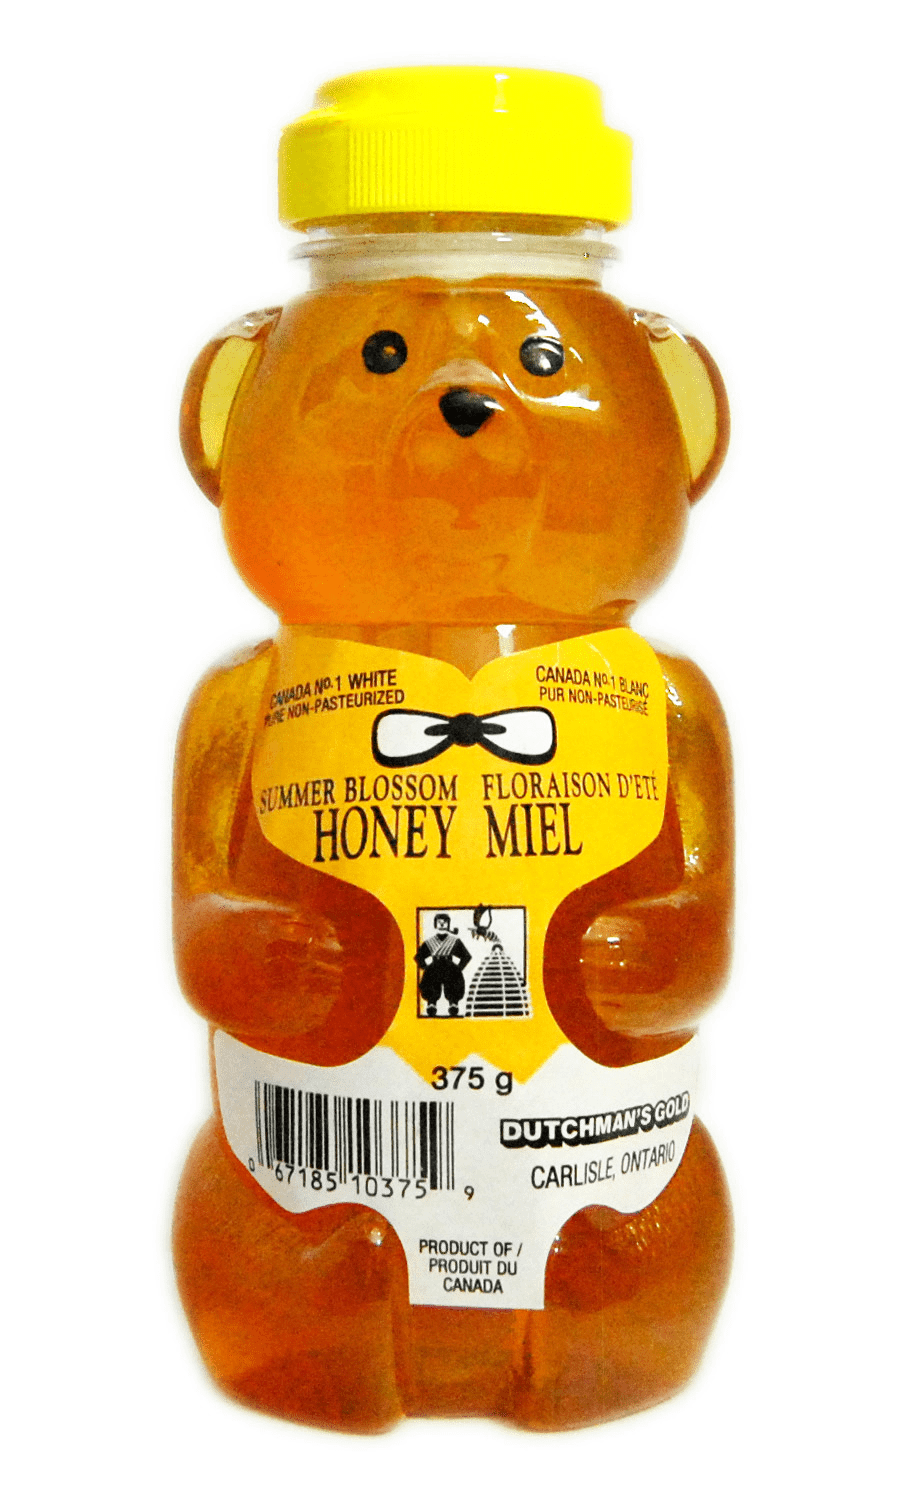 Summer Blossom Honey Bears (375g)